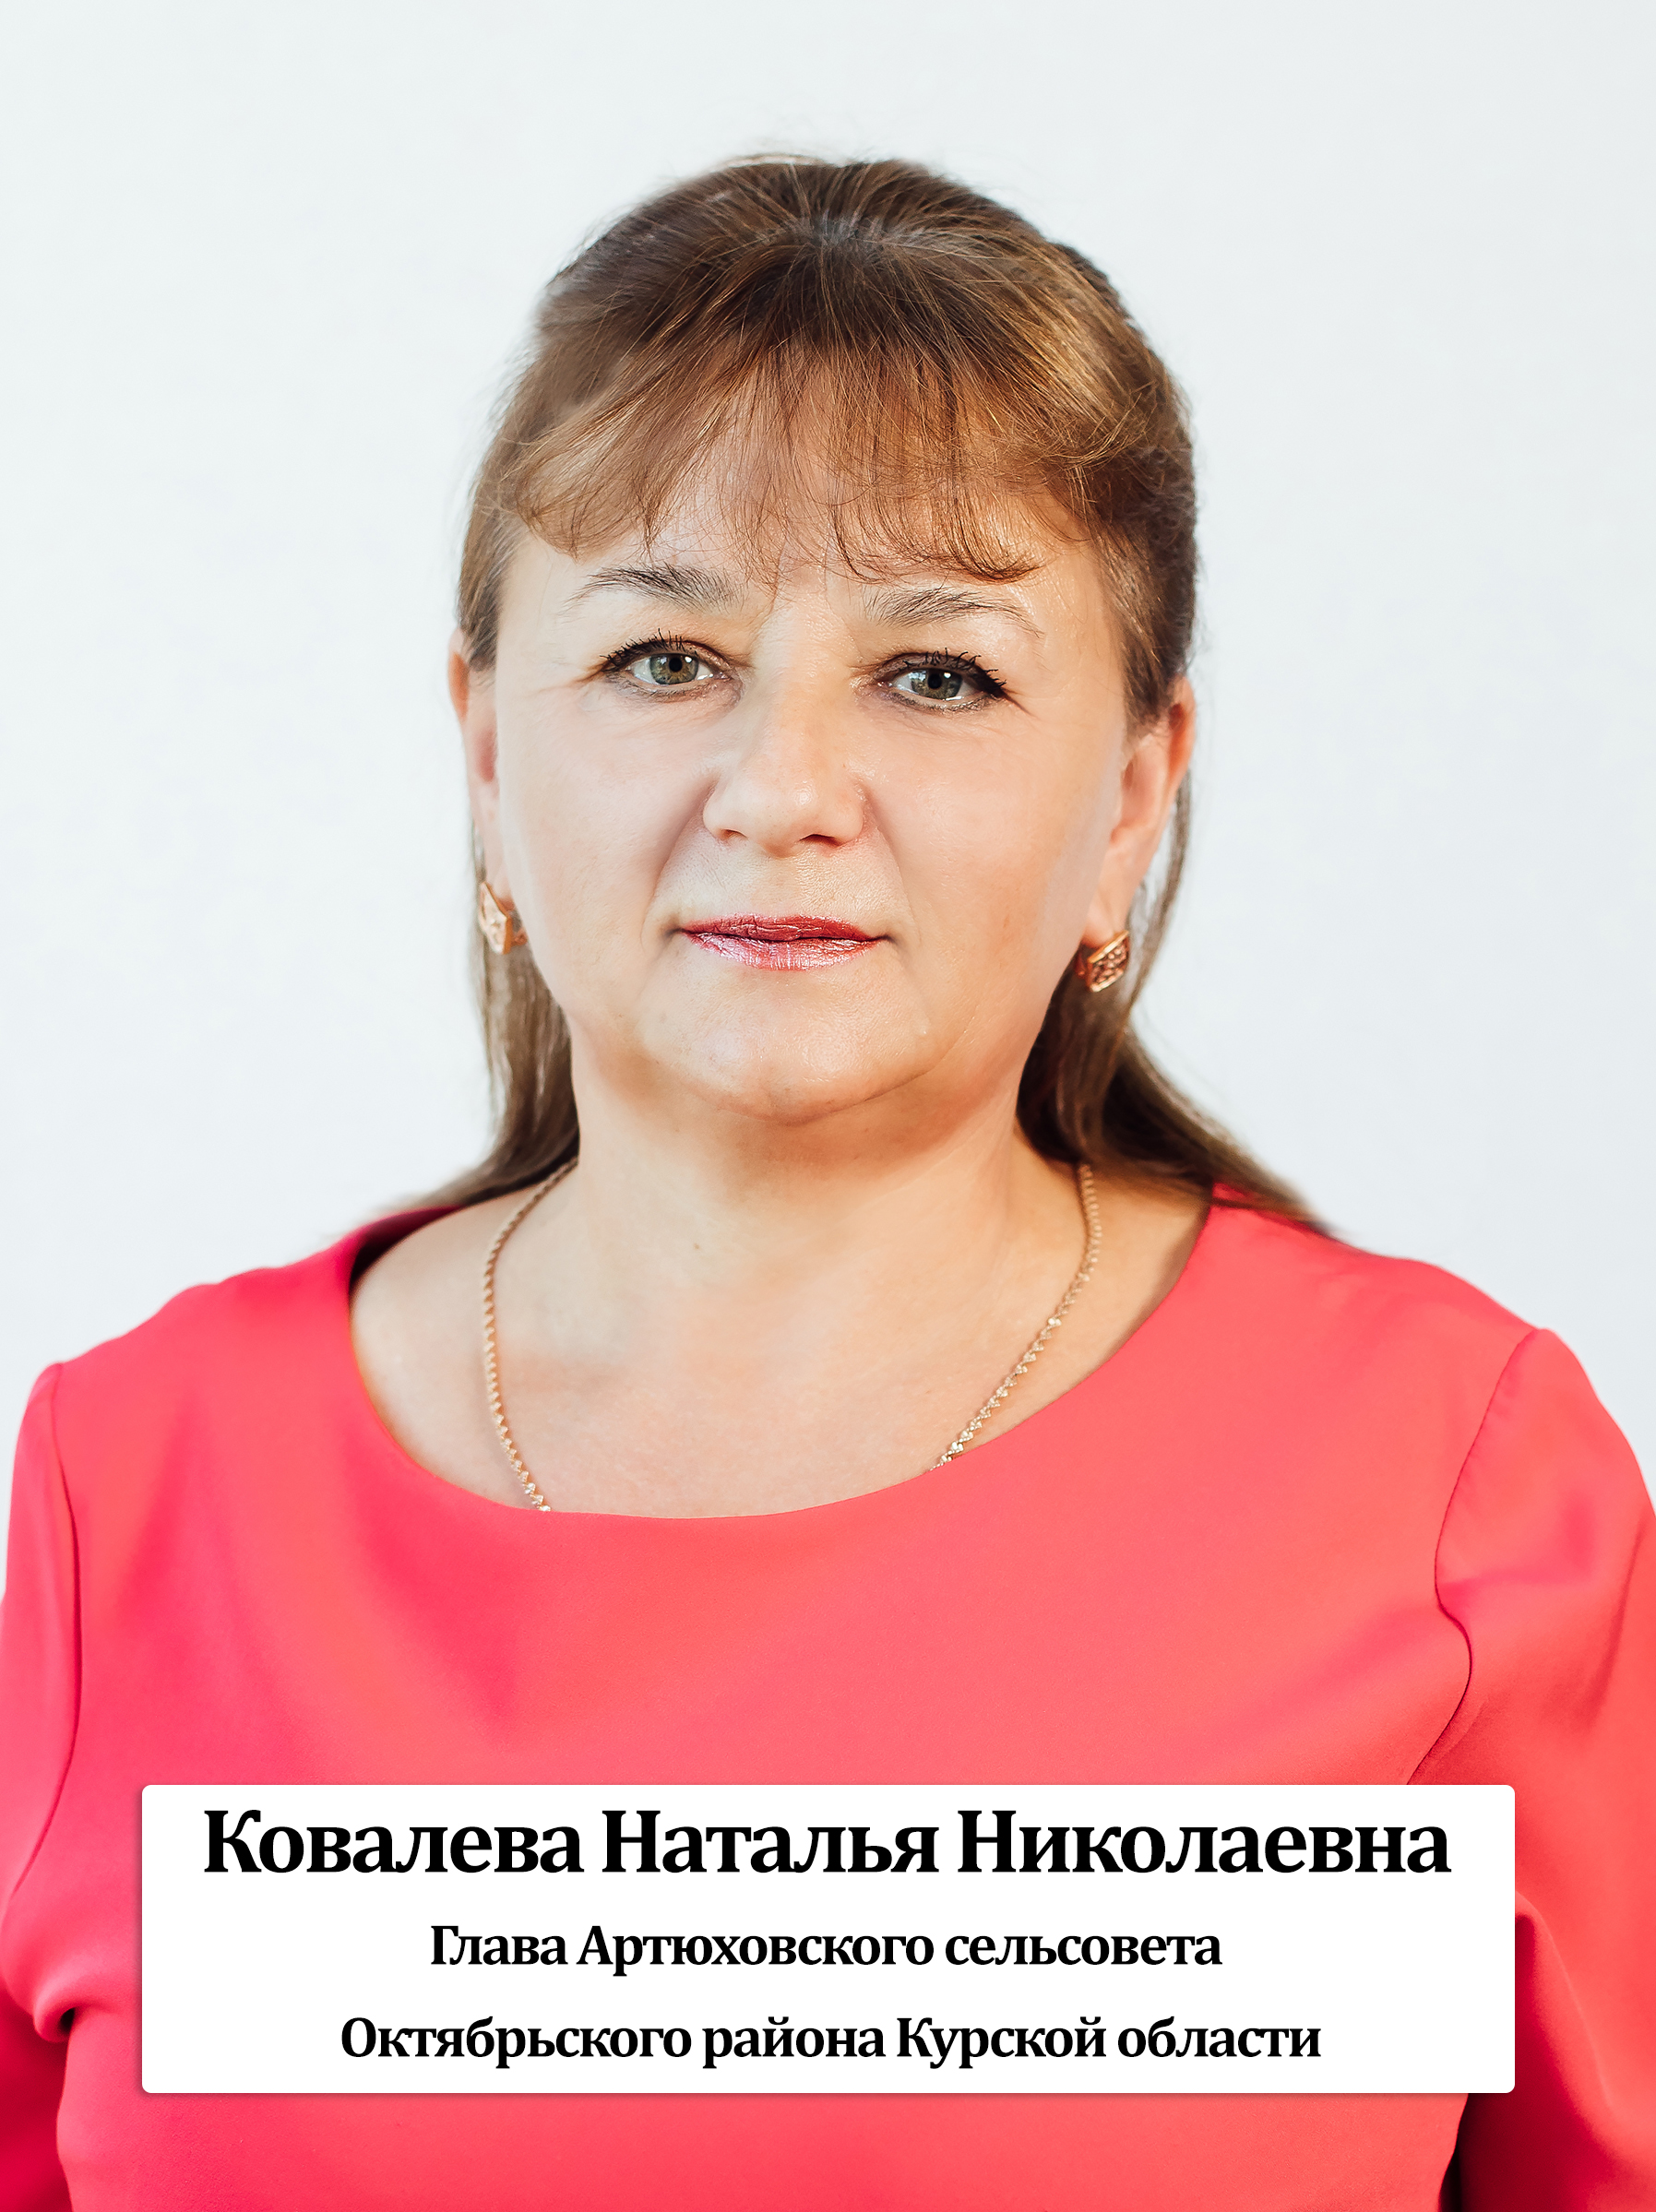 Ковалева Наталья Николаевна.